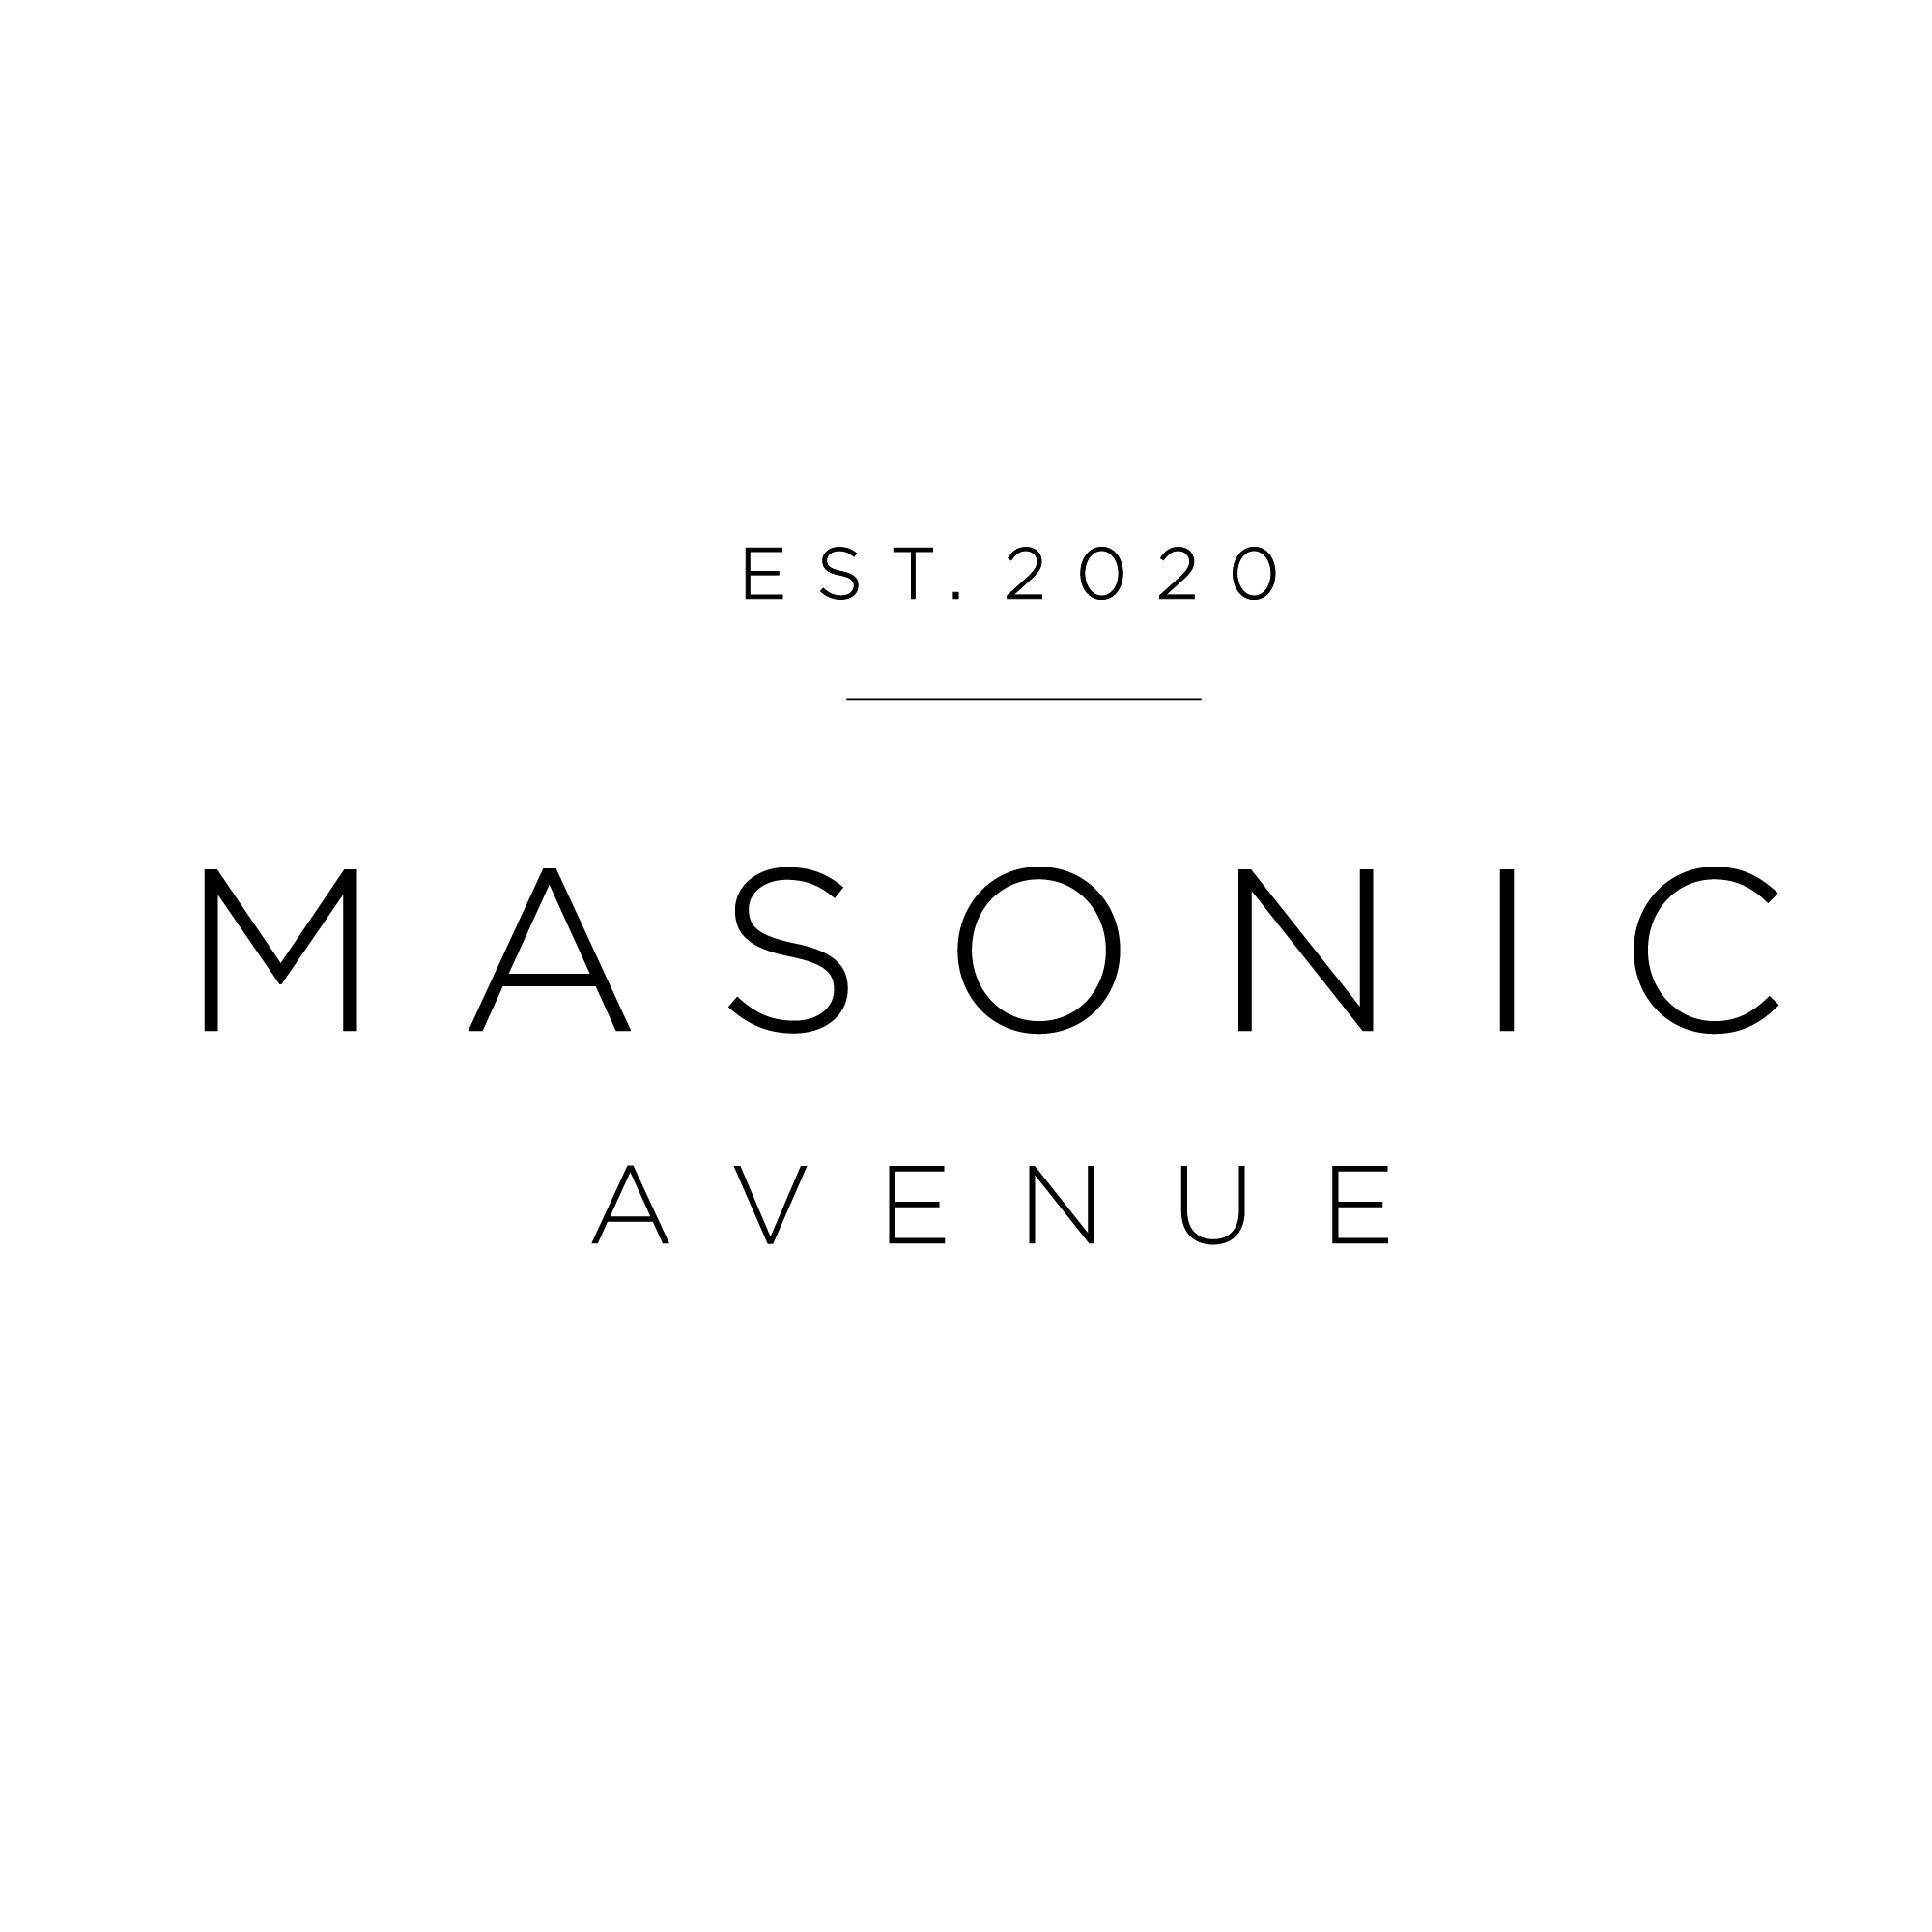 Masonic Avenue Logo and Brand Kit